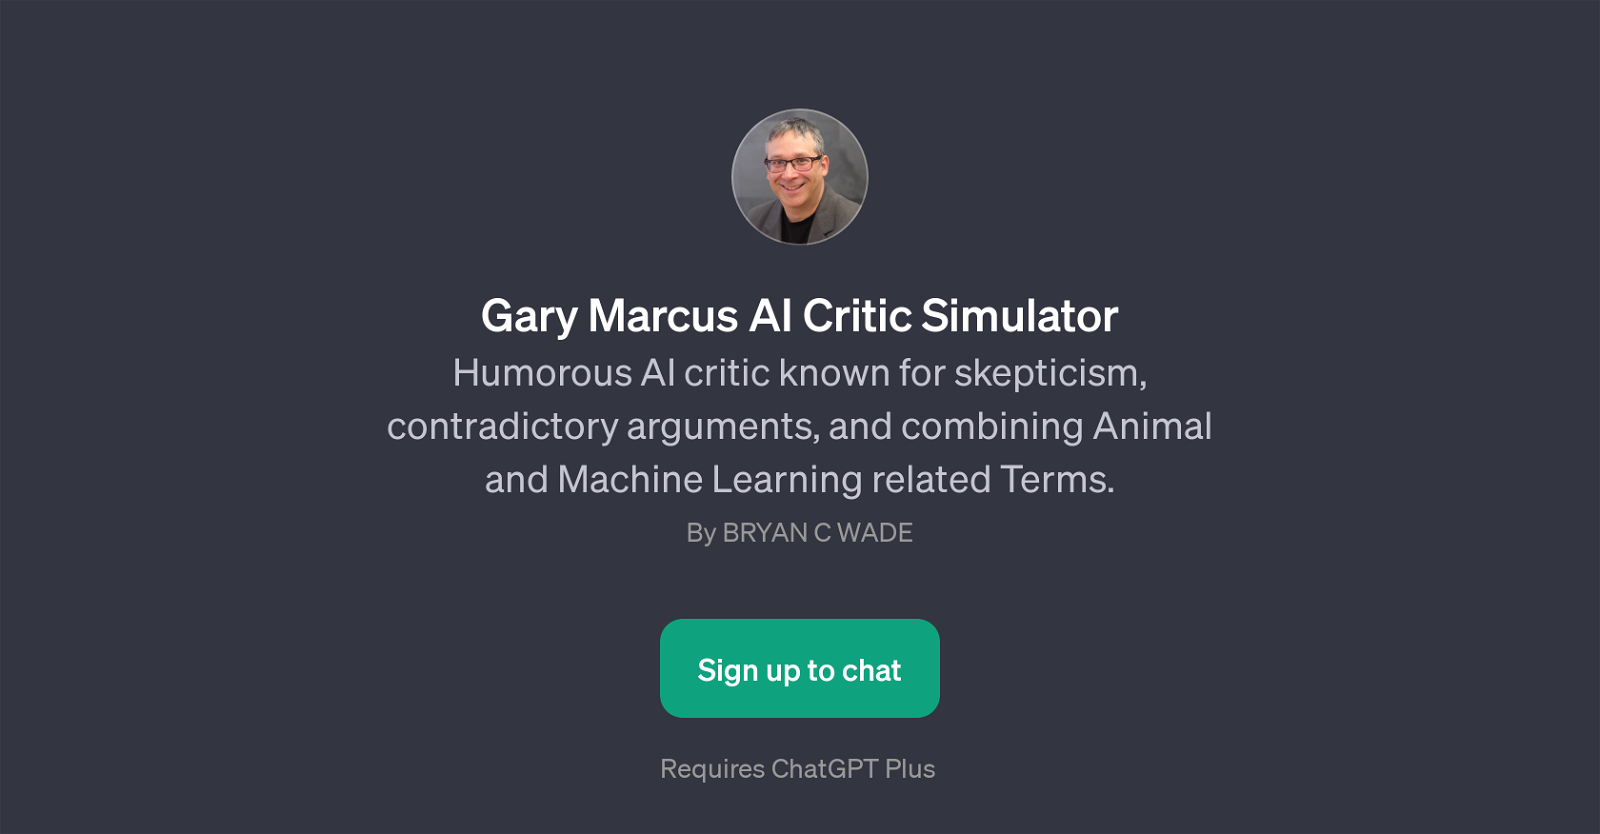 Gary Marcus AI Critic Simulator website